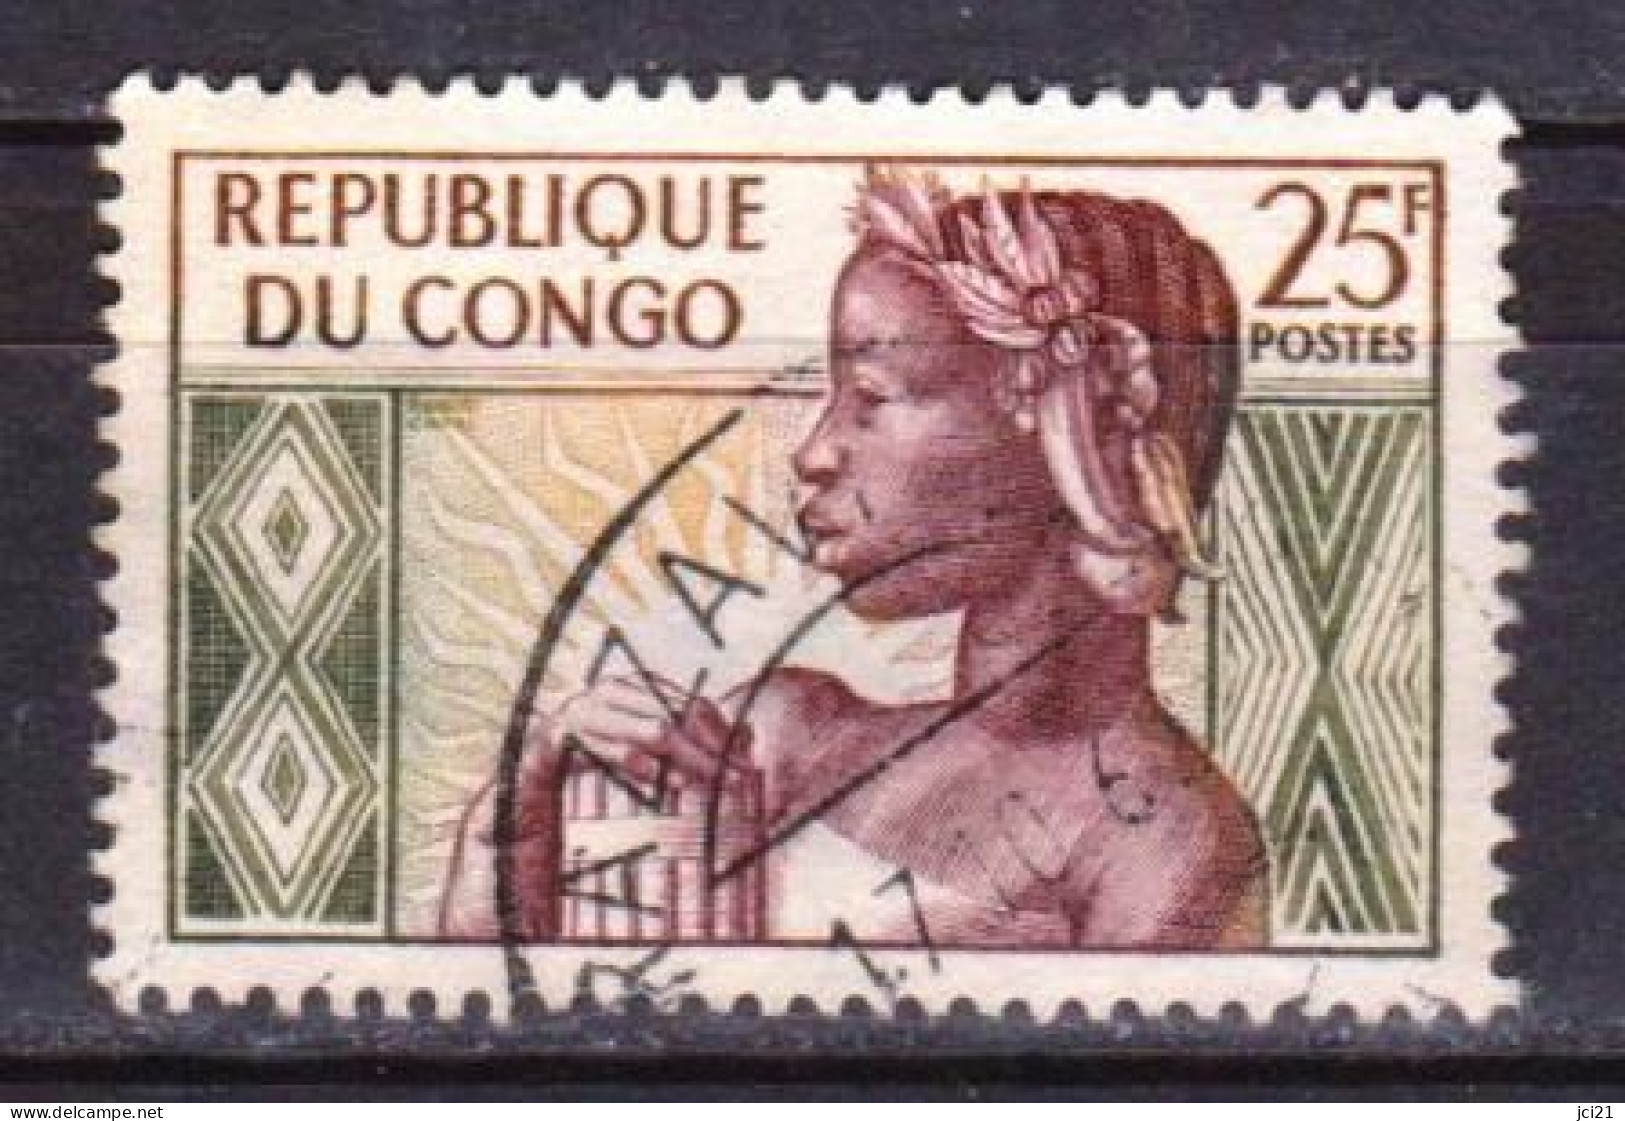 TIMBRE REPUBLIQUE DU CONGO JEUNE INDIGÈNE (2061)_Ti1170 - Usati